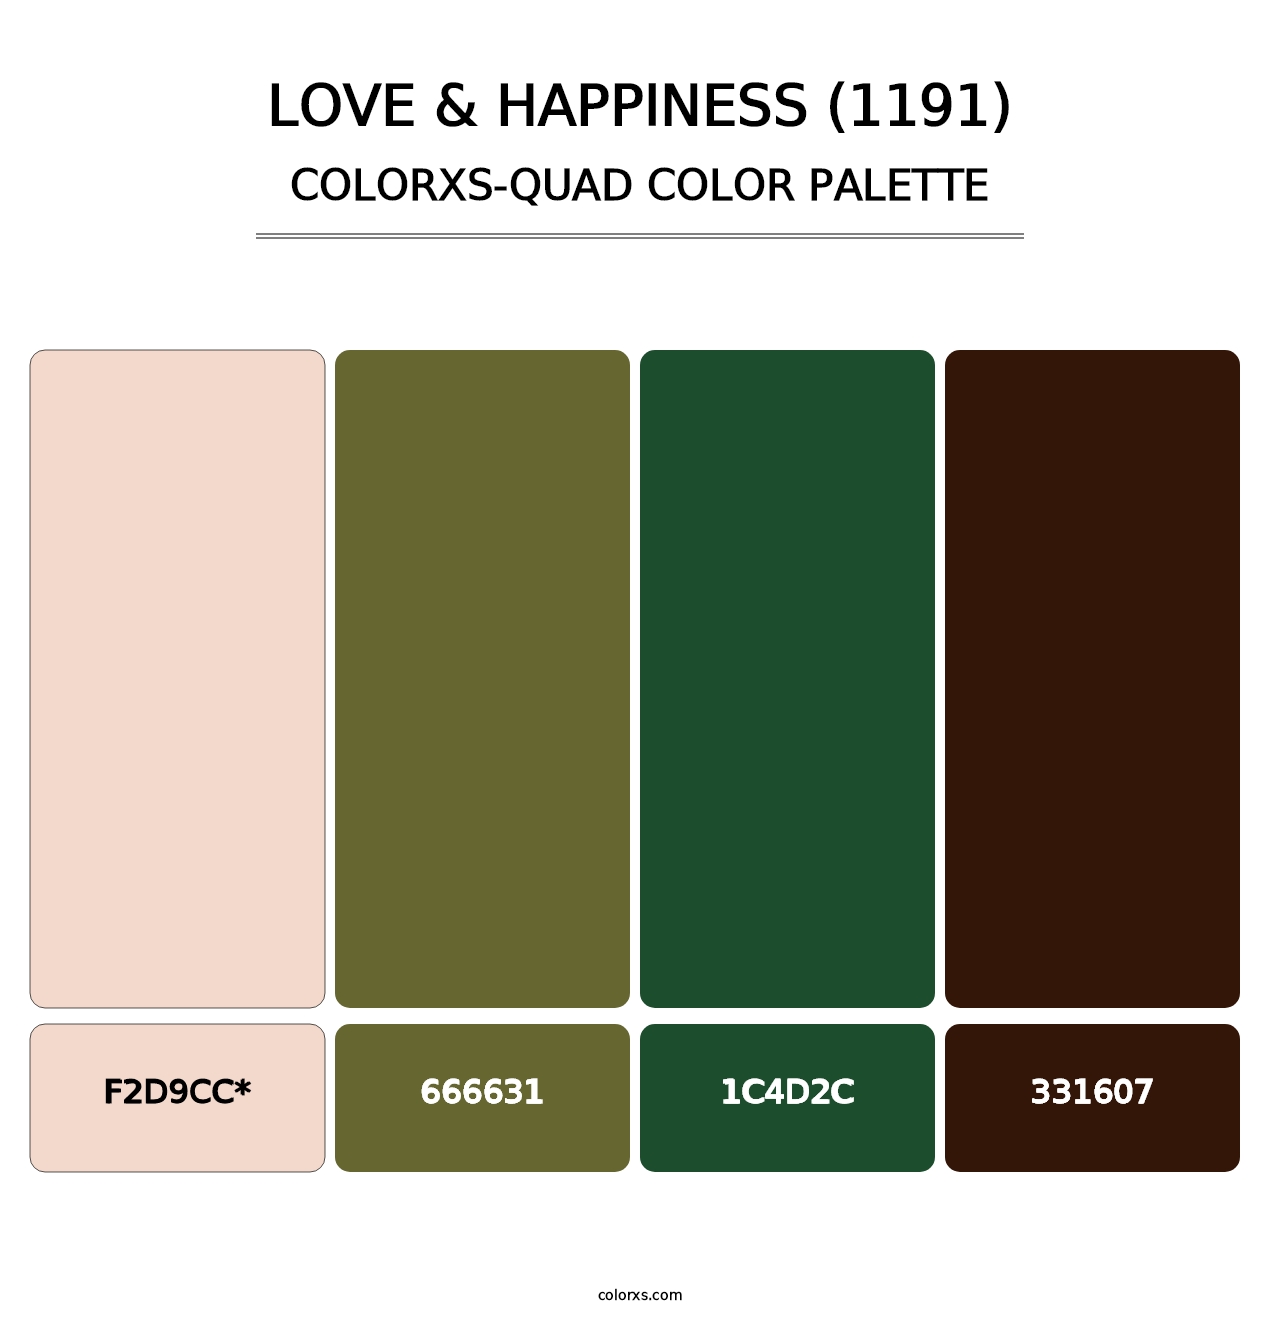 Love & Happiness (1191) - Colorxs Quad Palette